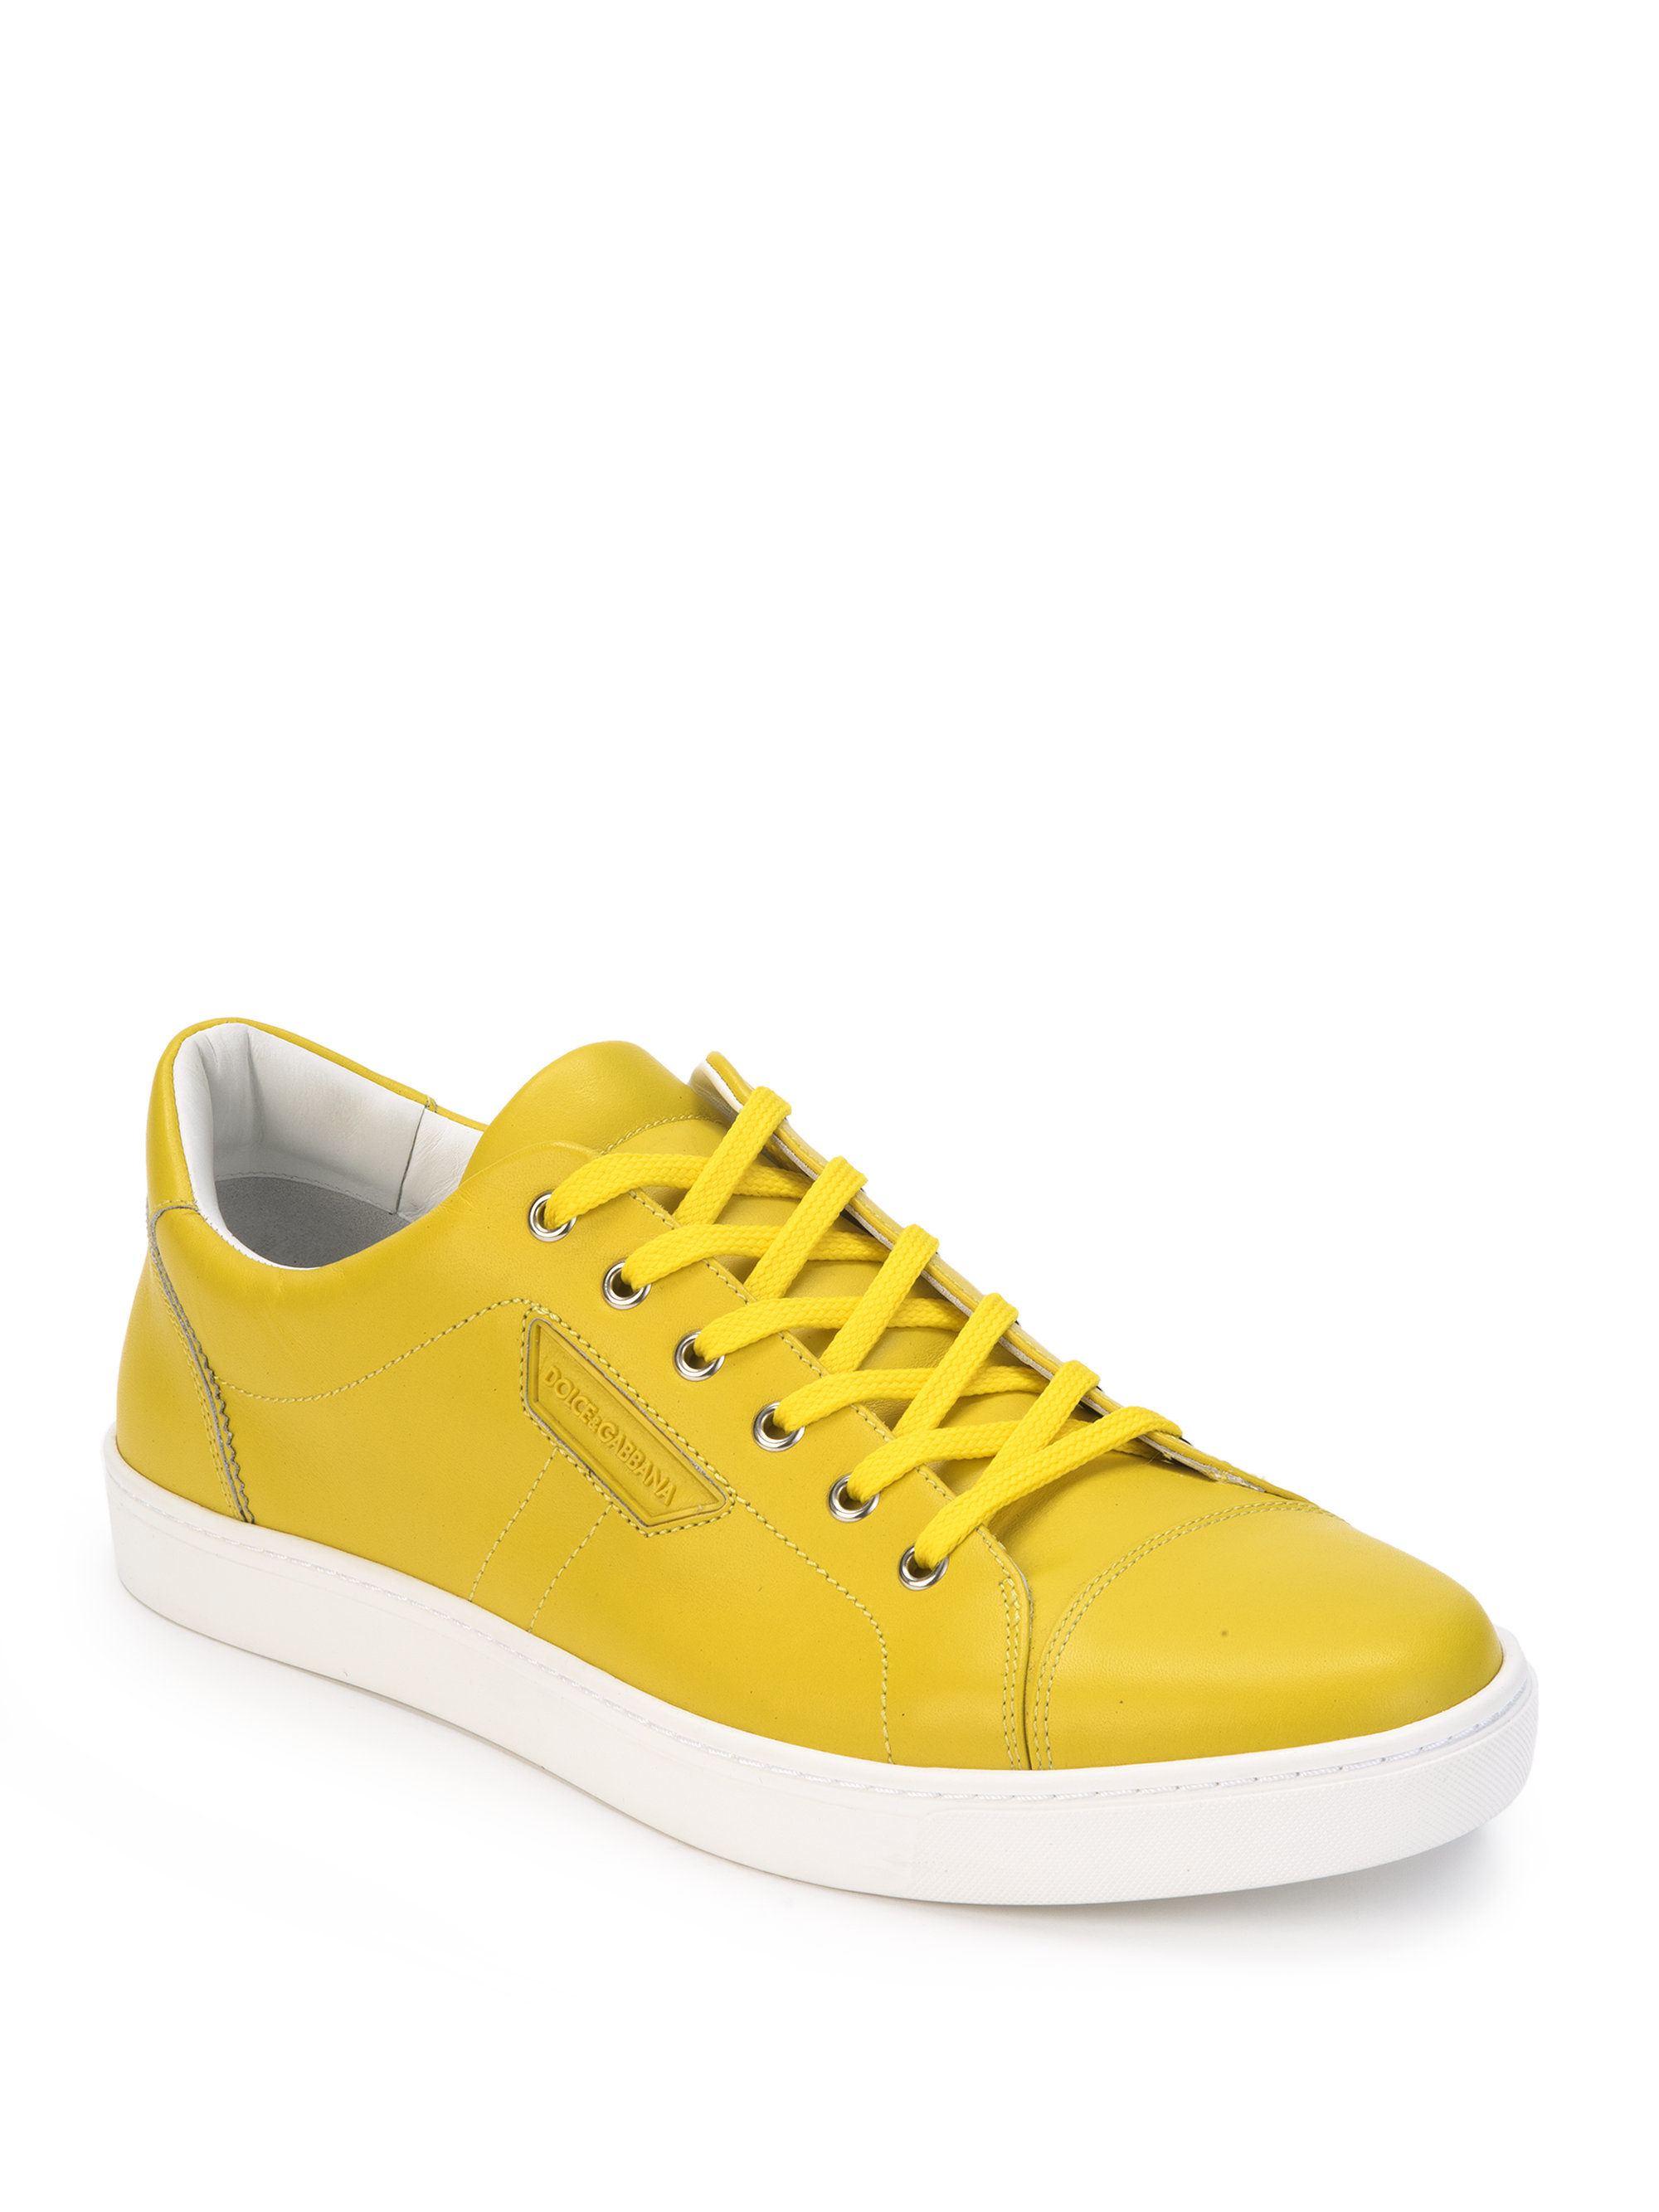 Mens yellow sneakers - 28 images - mens yellow sneakers 28 